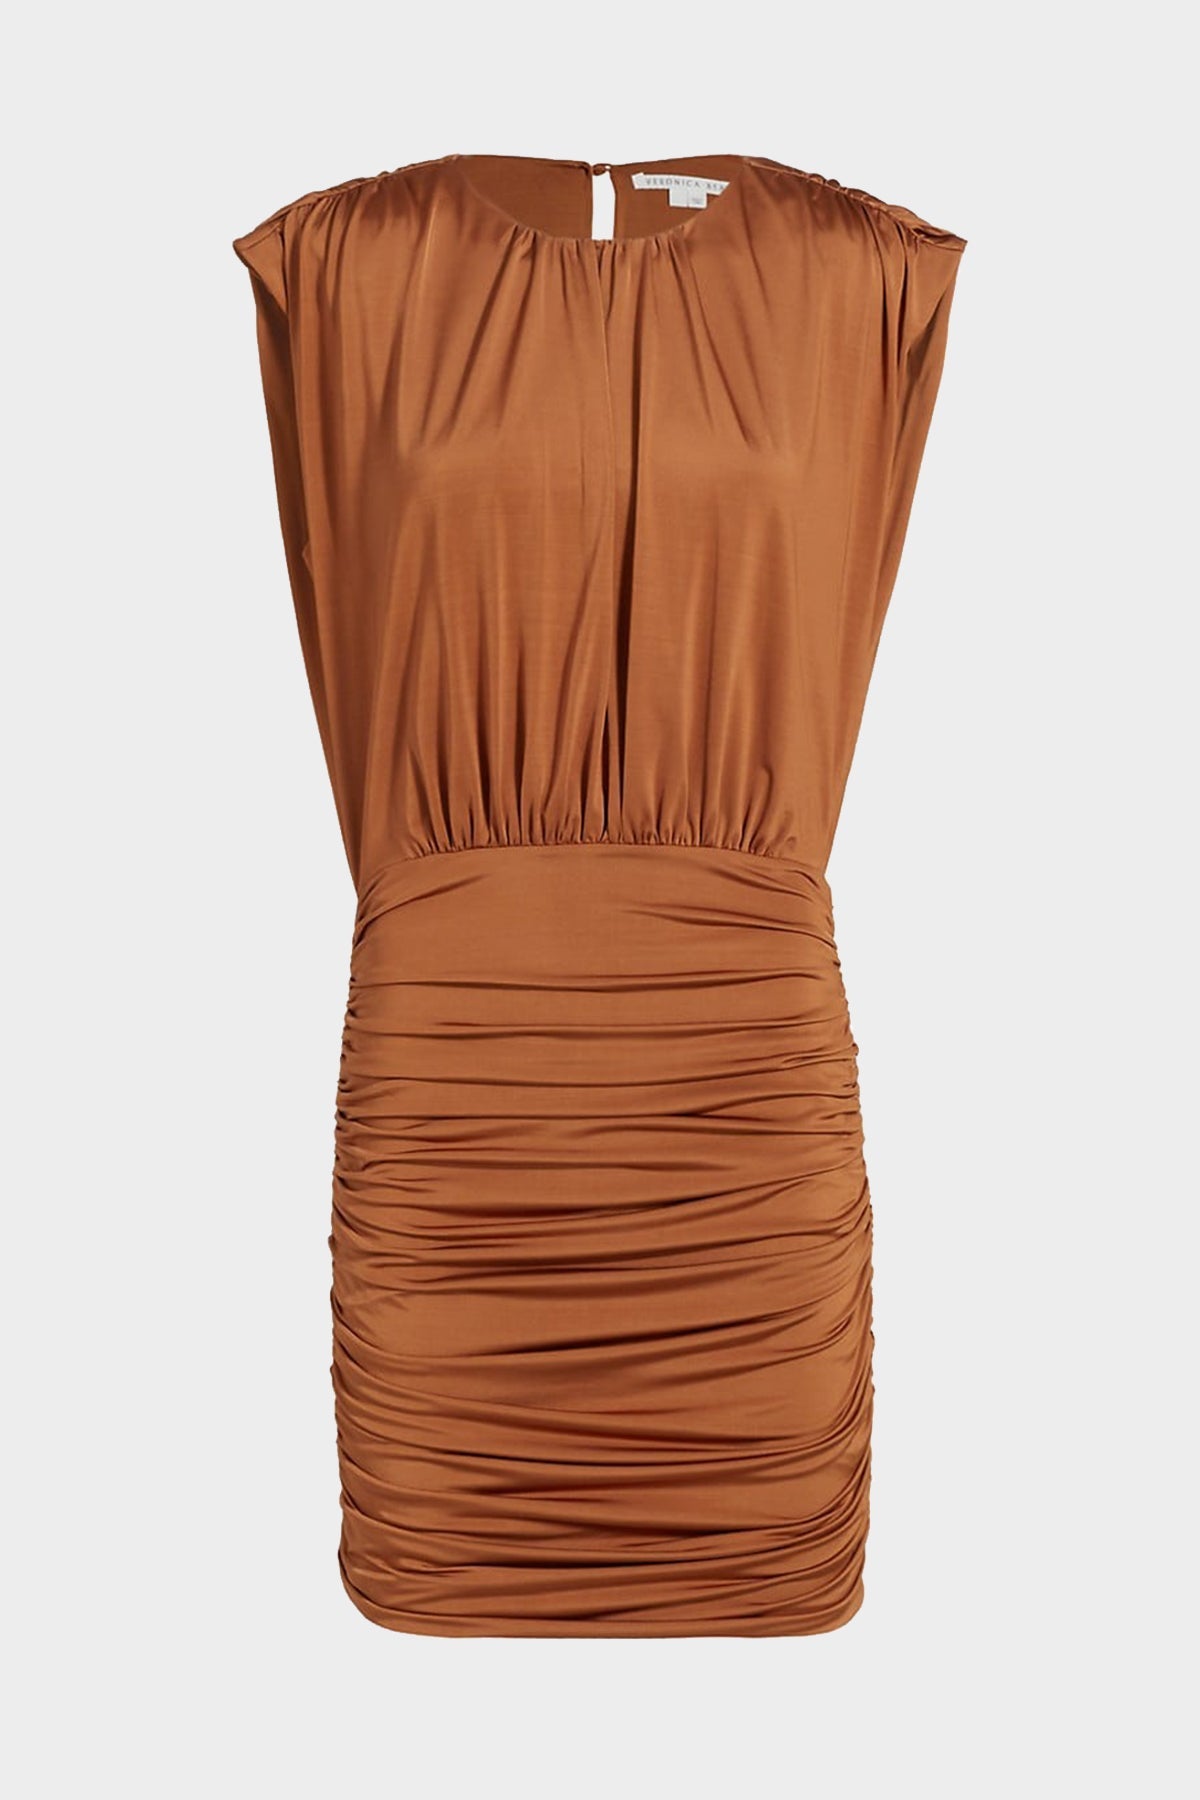 Bora Mini Dress in Golden Brown - shop-olivia.com